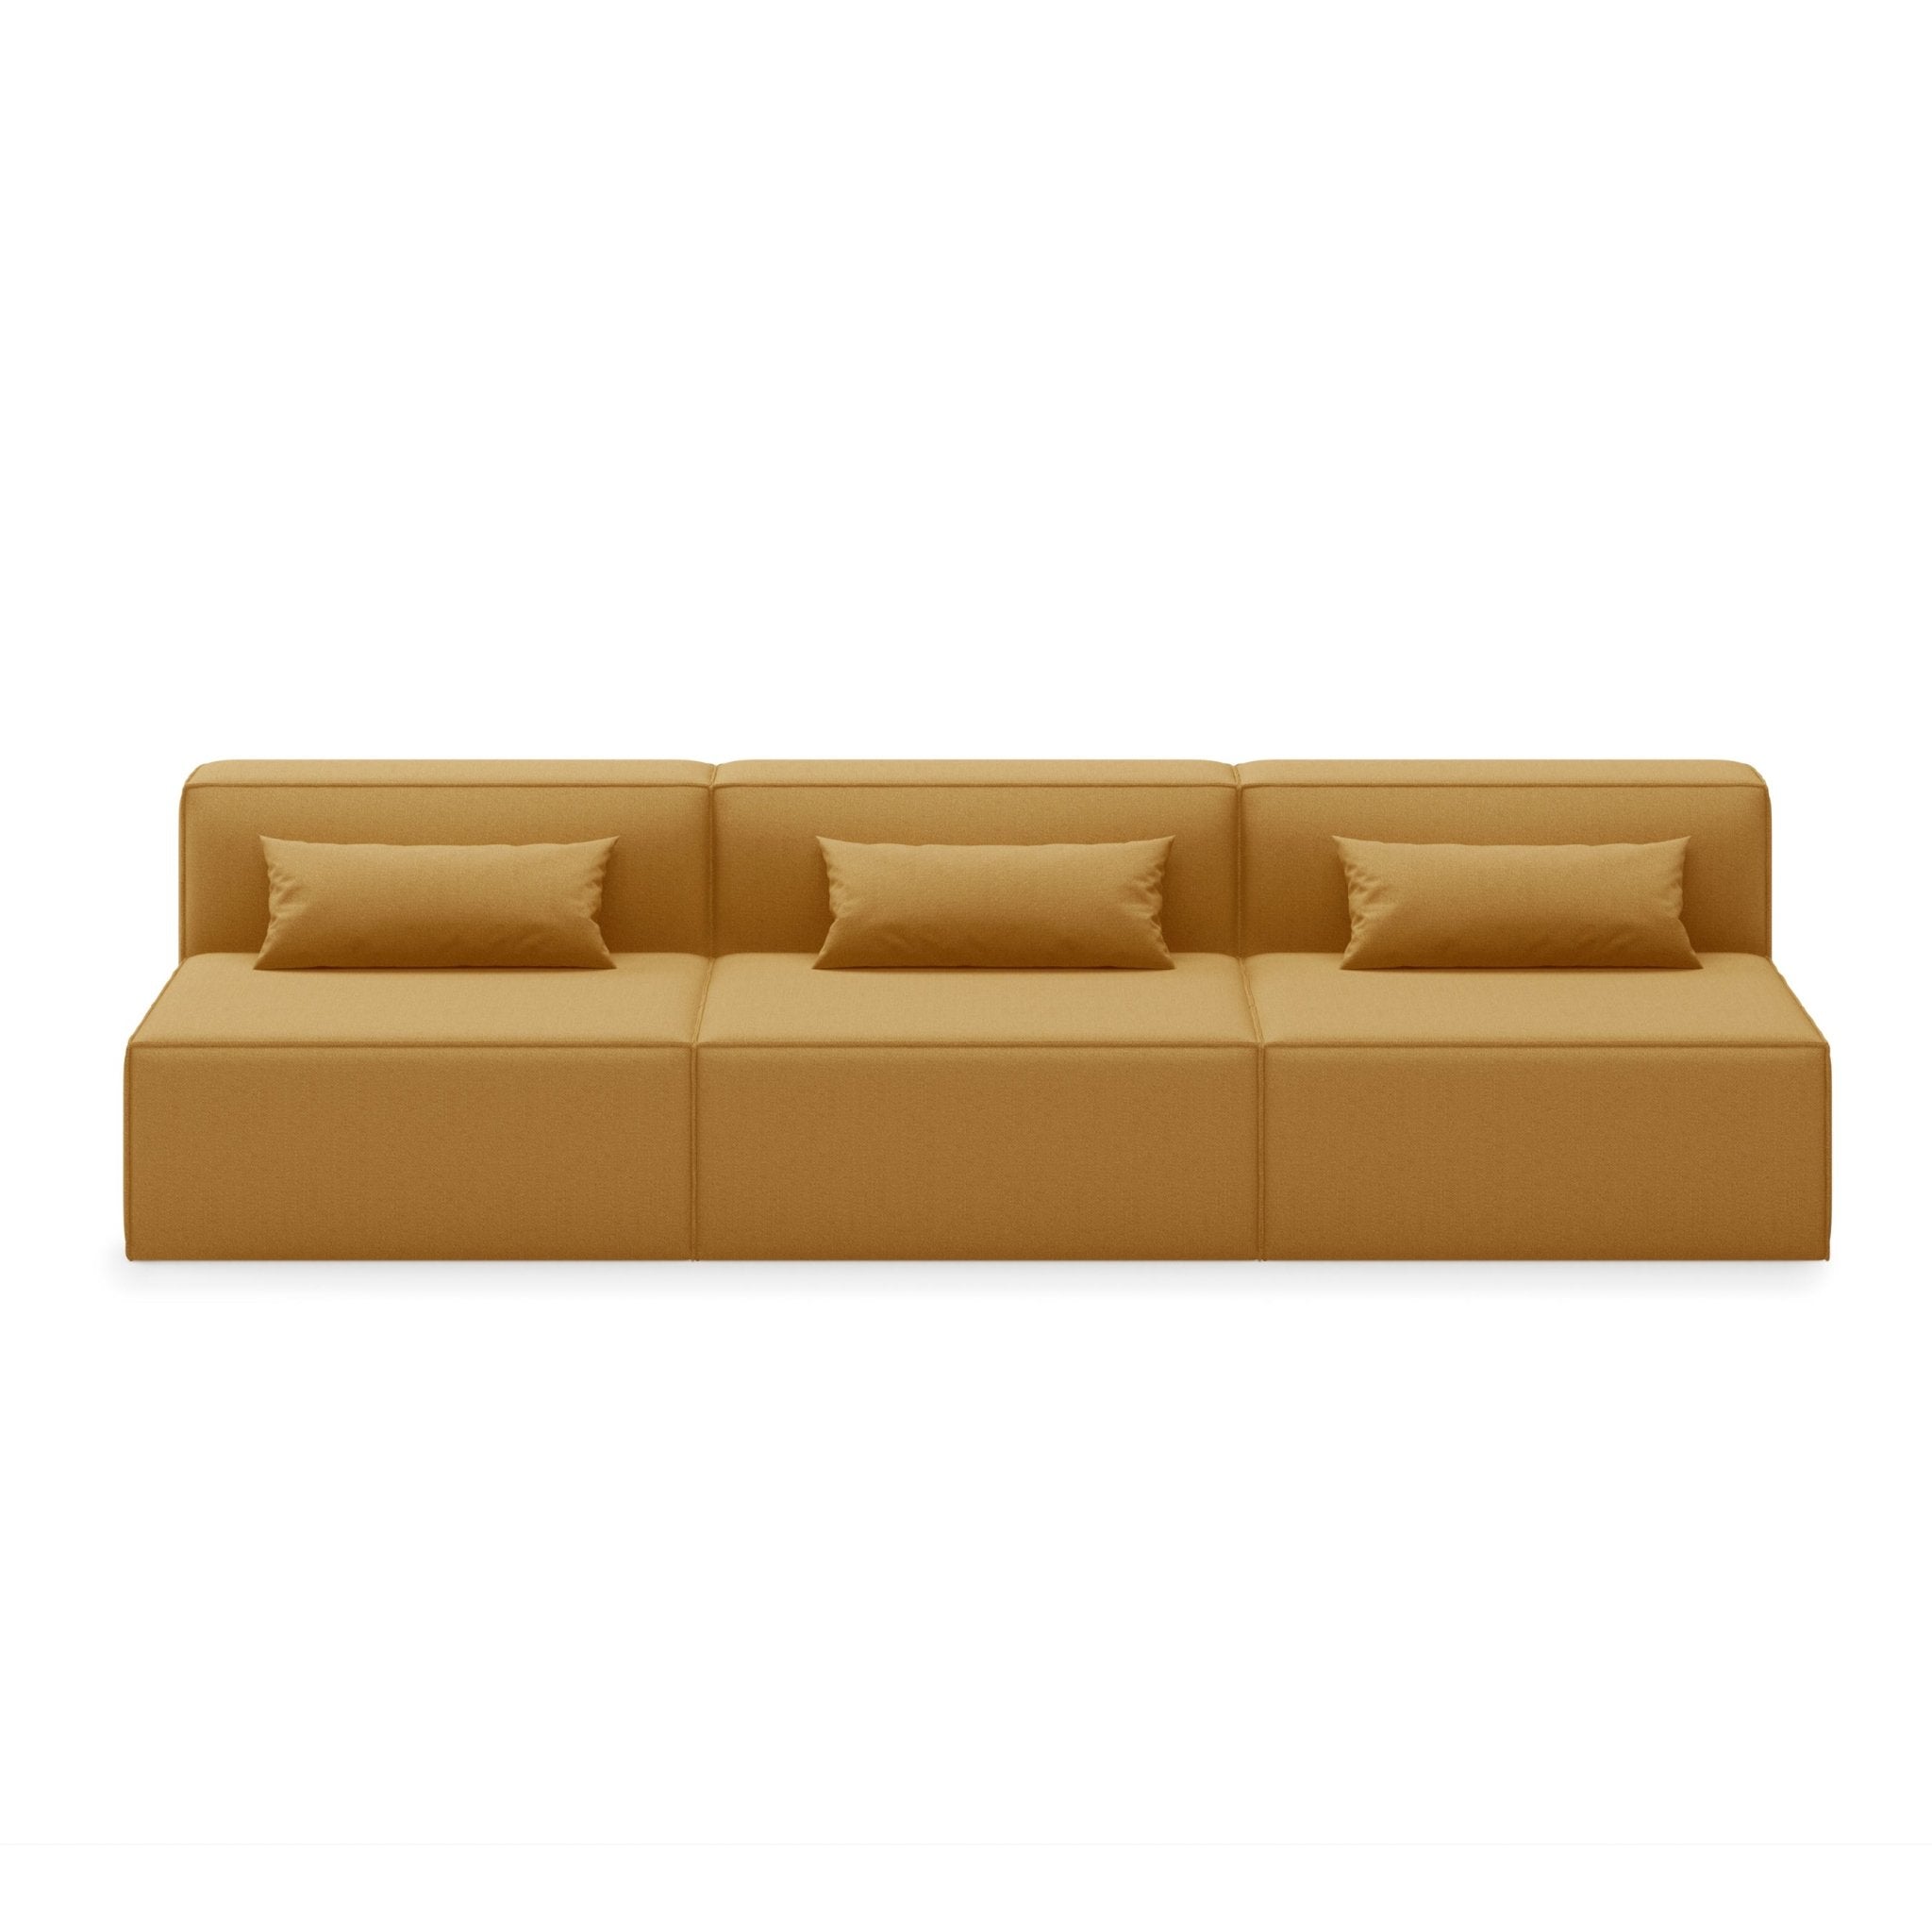 Mix Armless Sofa: 3-Seater - Mowat Ferro